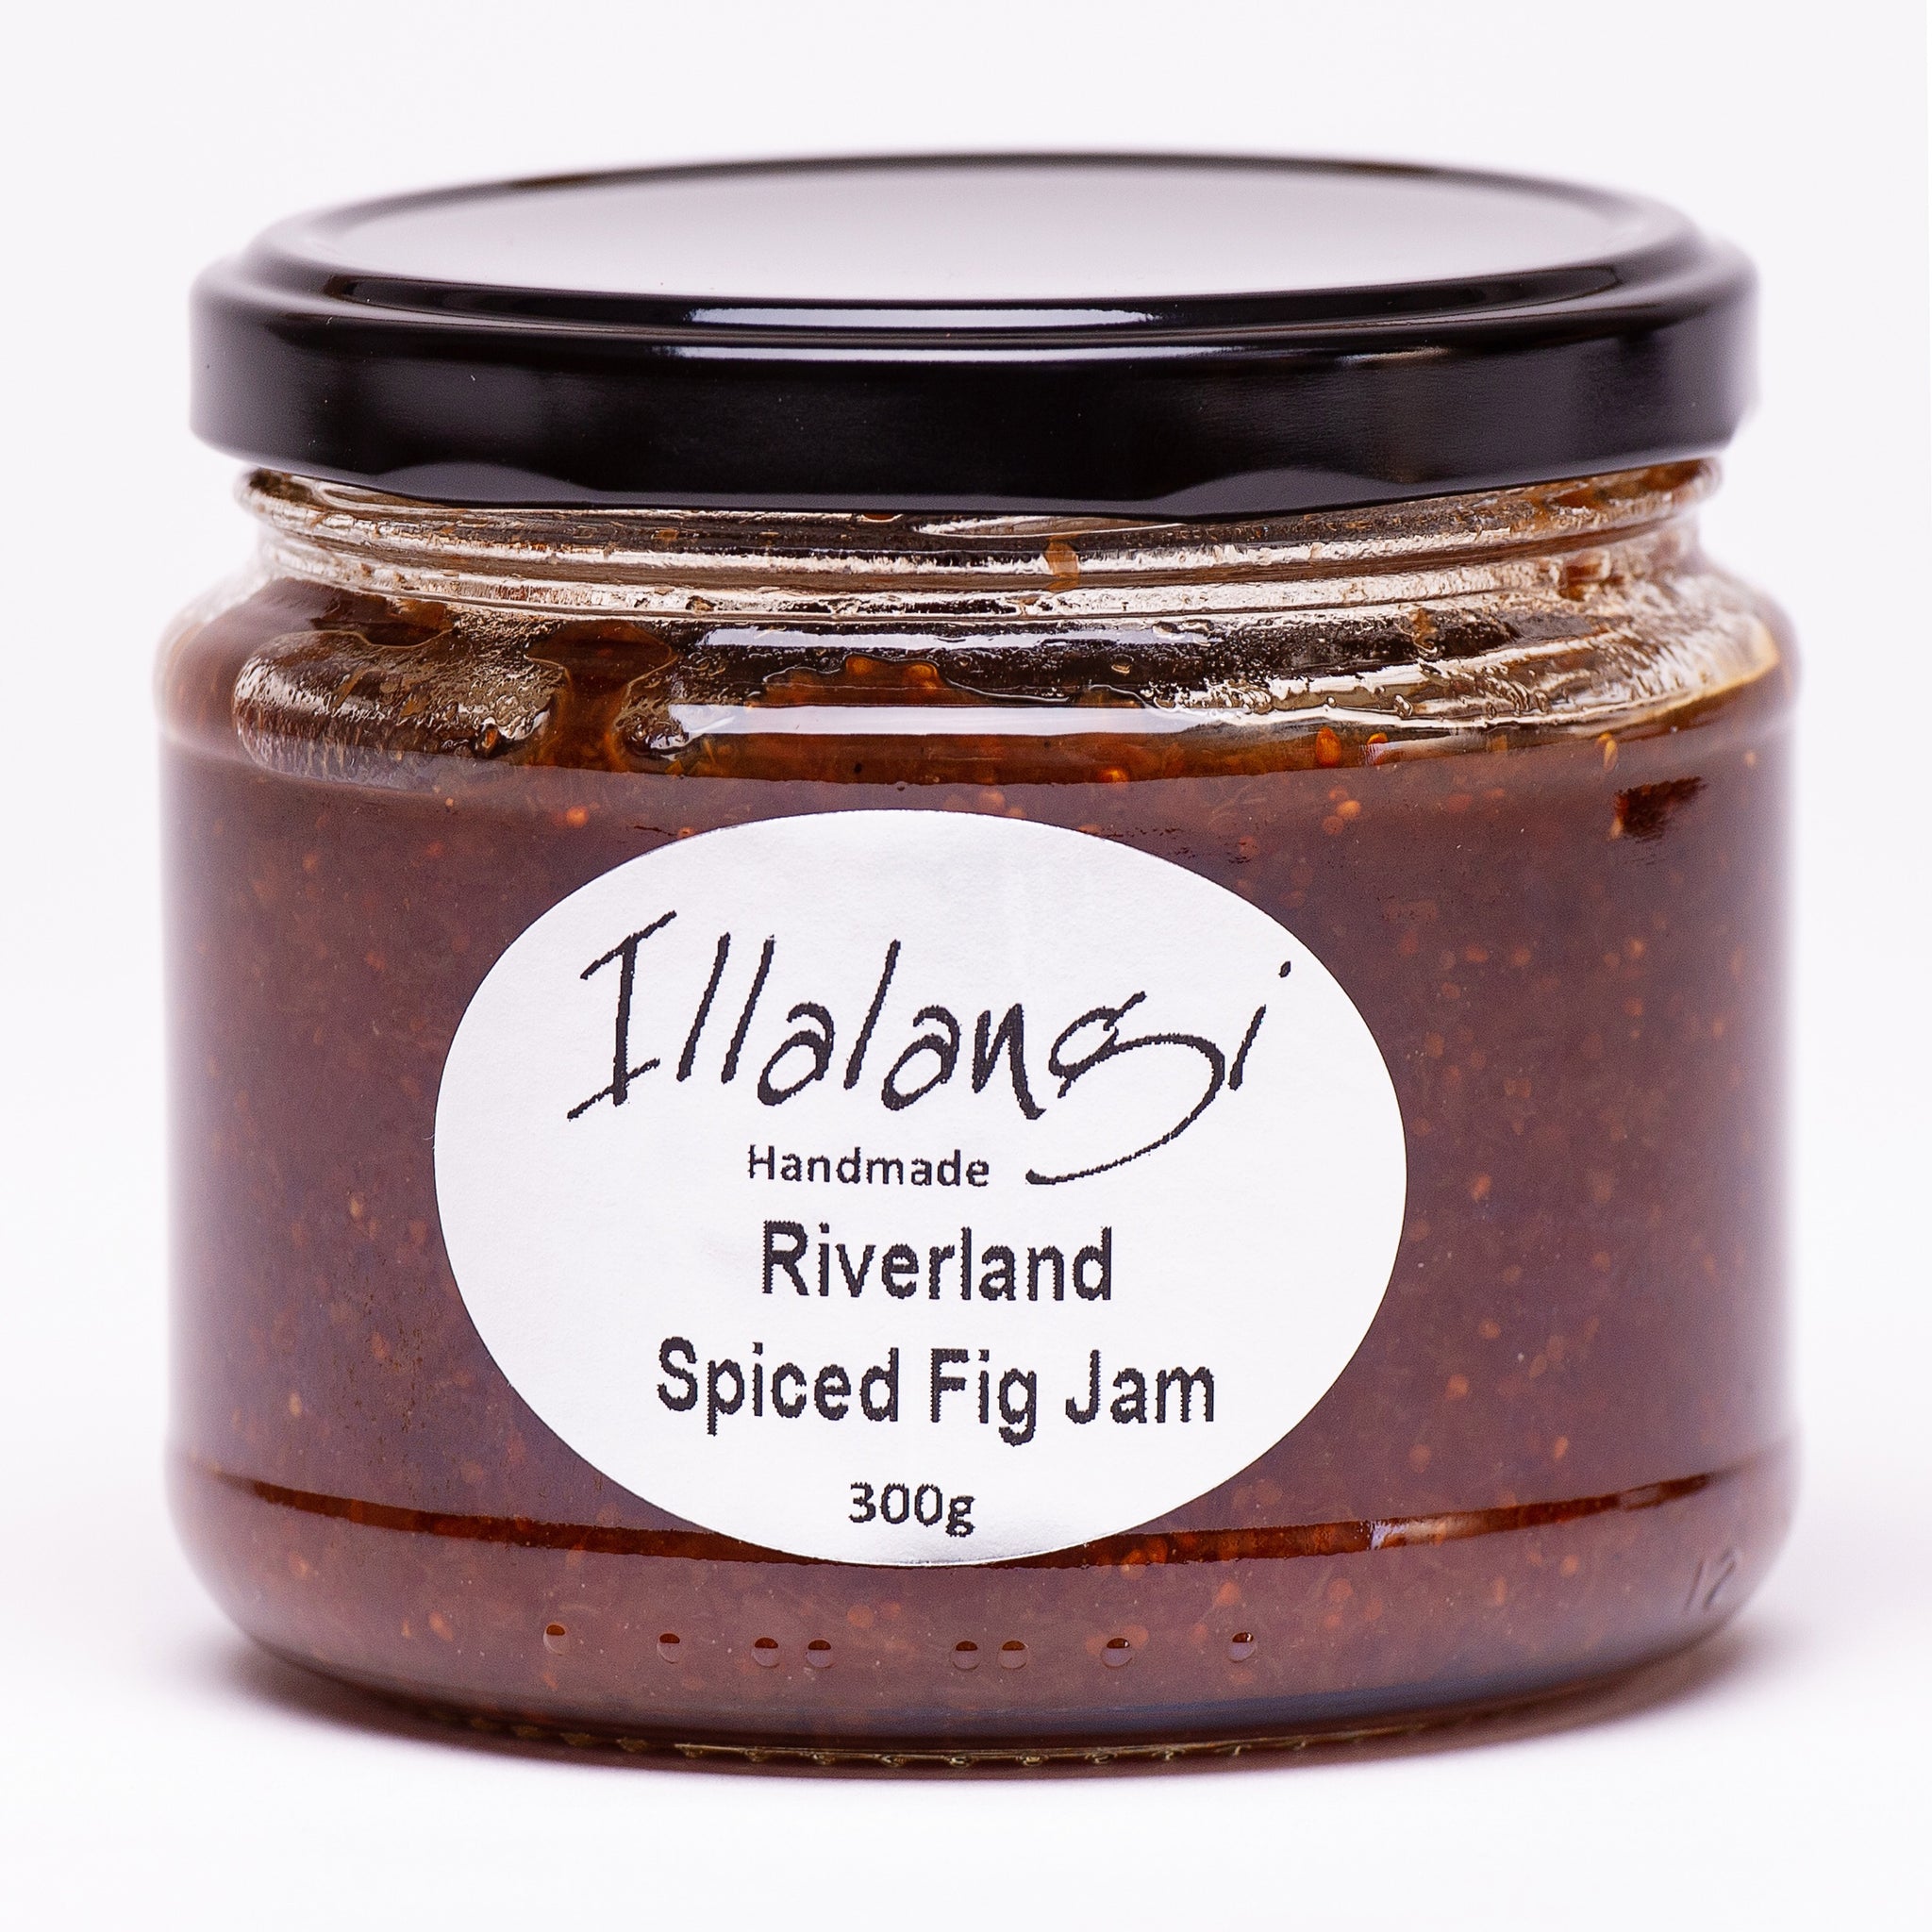 Illalangi Handmade - Riverland Spiced Fig Jam -